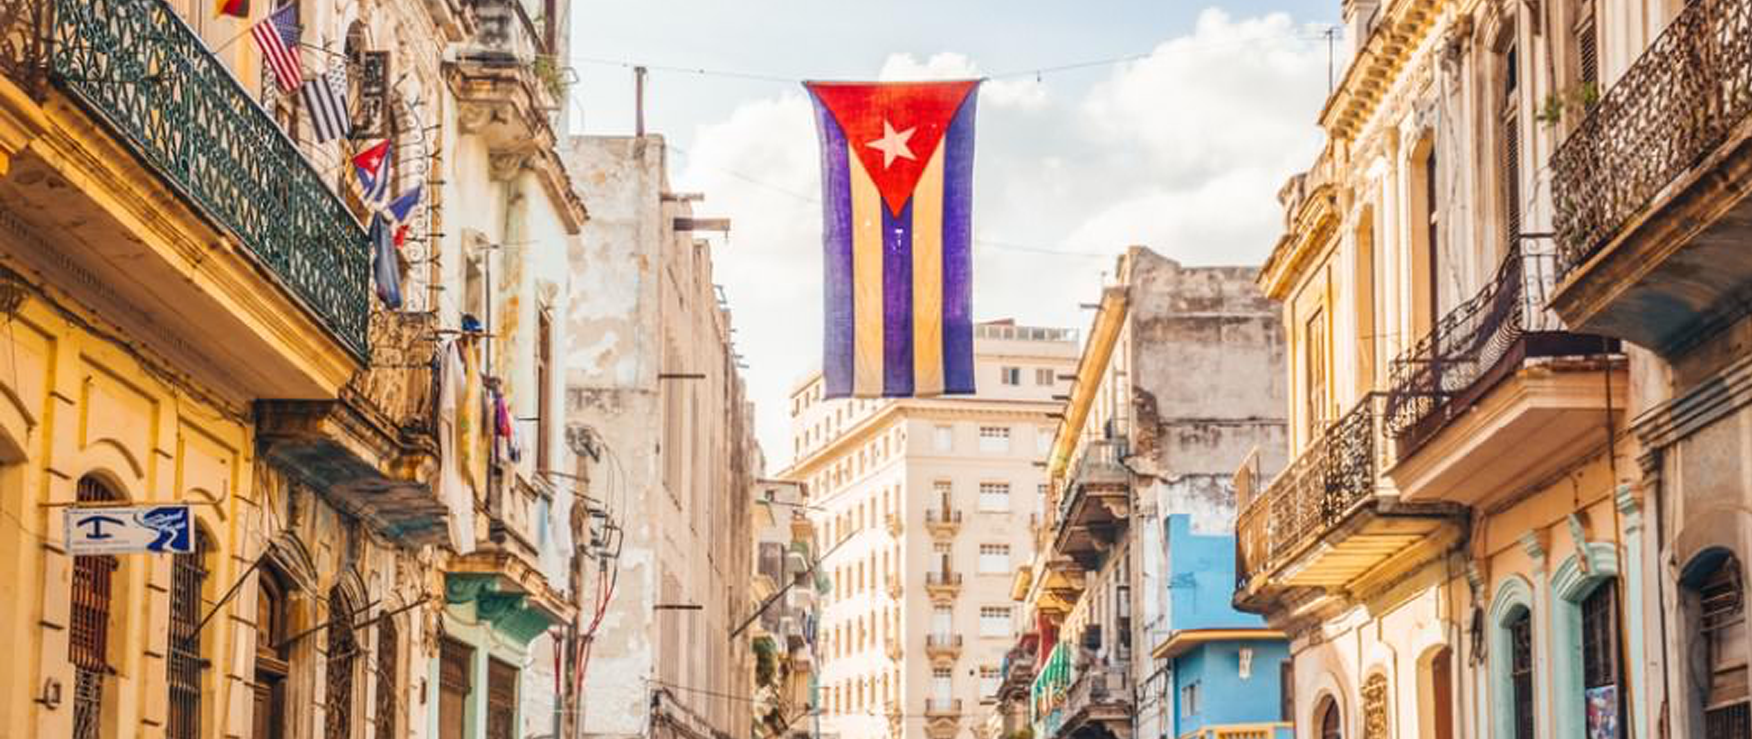 Take A Trip To Cuba With Flaneur